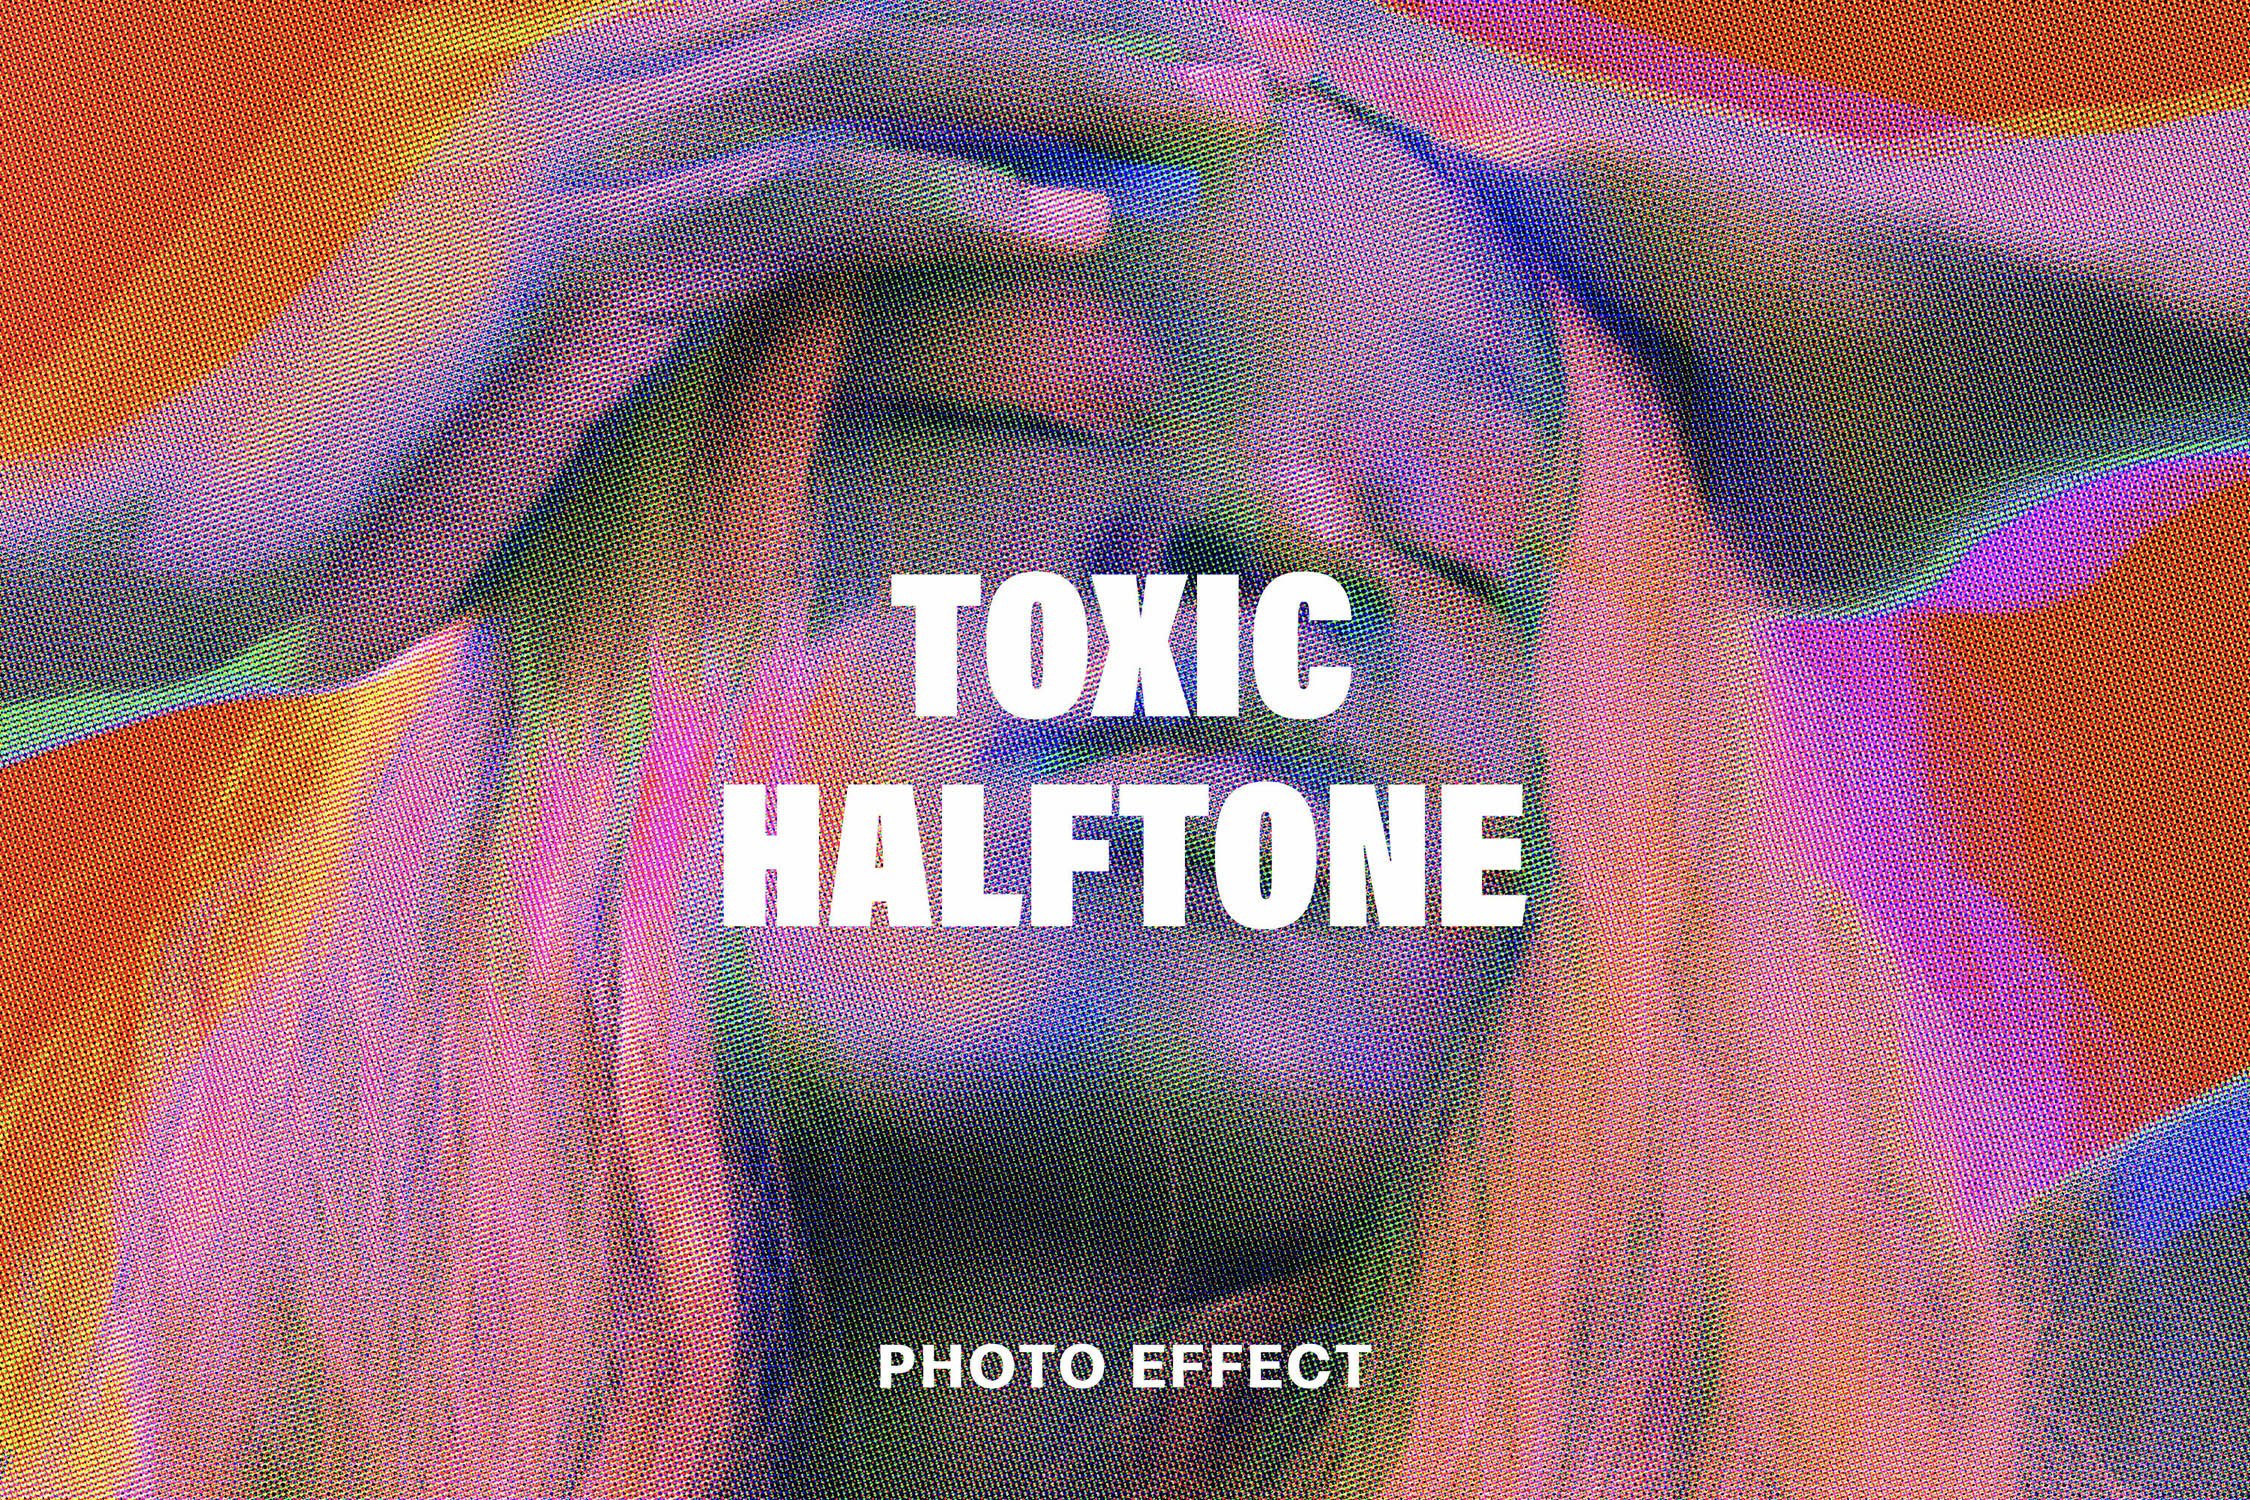 Toxic Halftone Effectcover image.